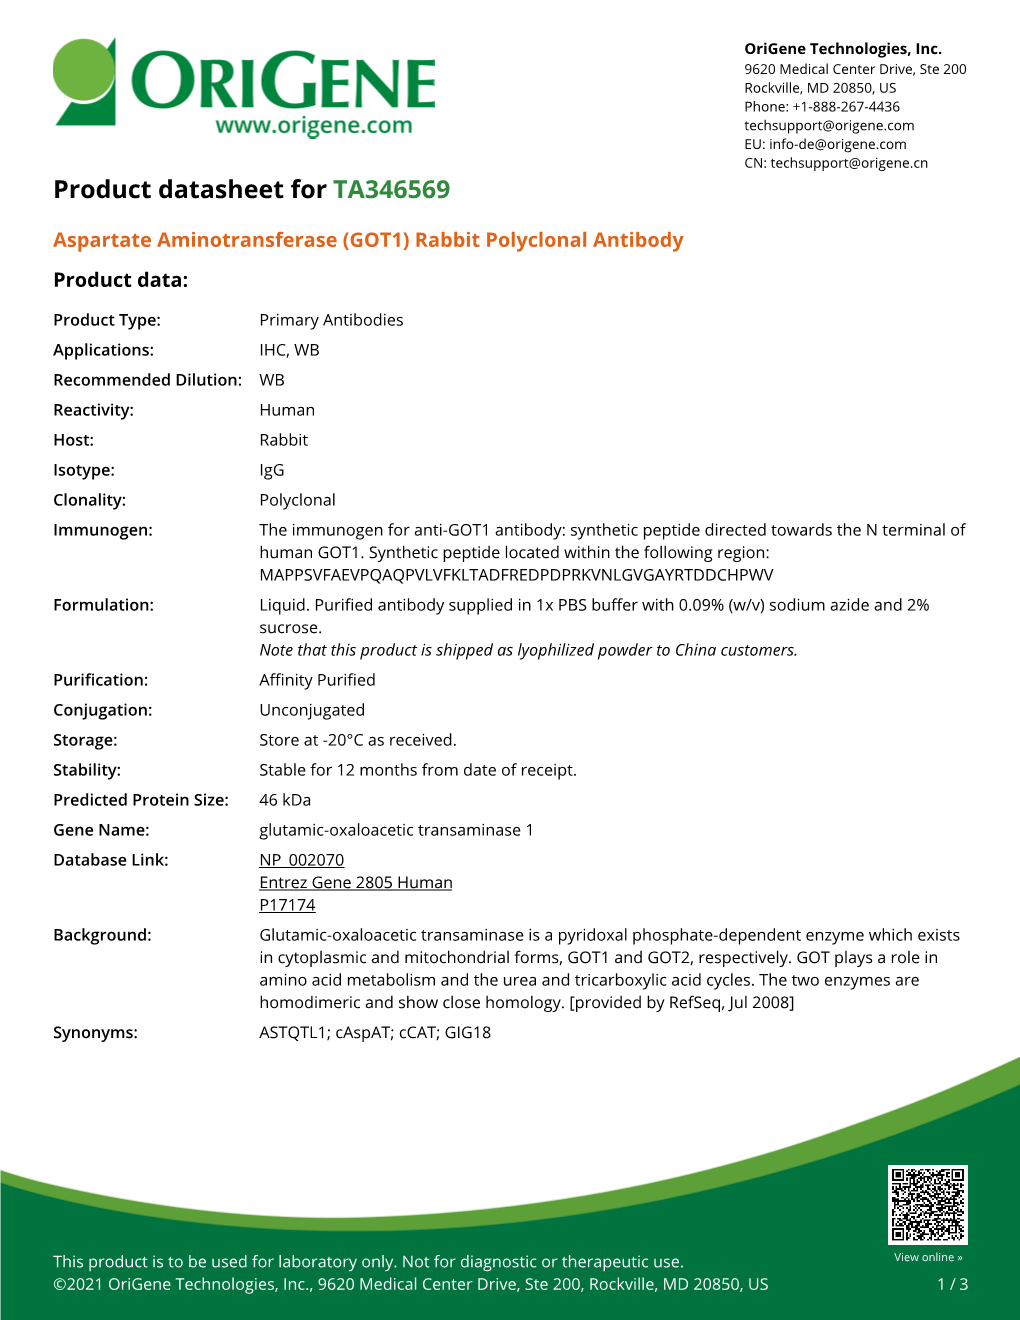 Aspartate Aminotransferase (GOT1) Rabbit Polyclonal Antibody Product Data